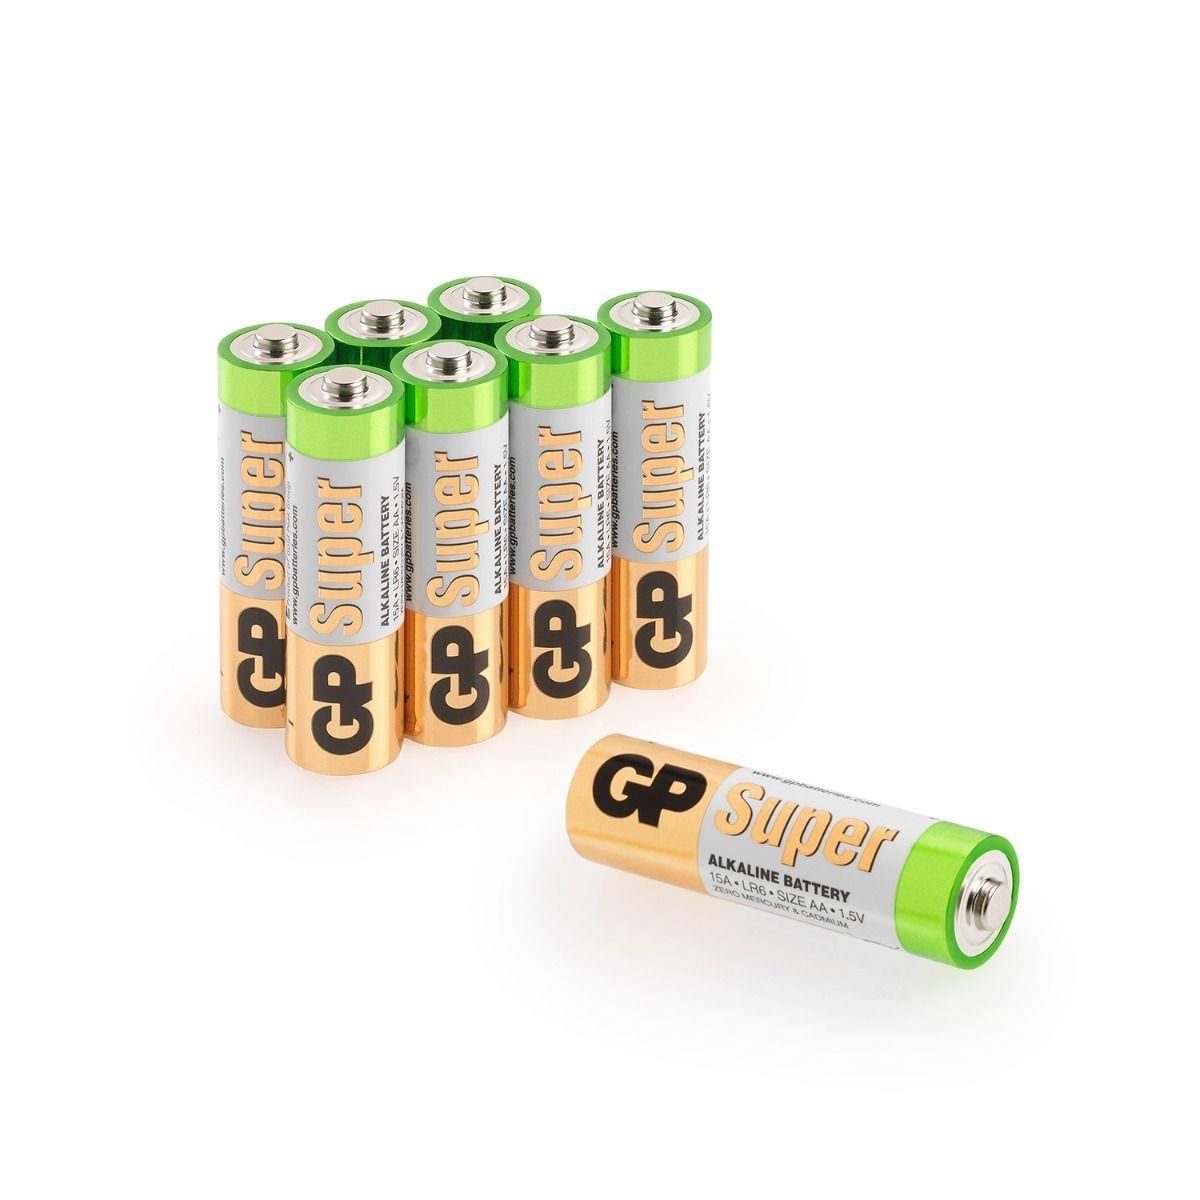 GP Battery 8+8 GP